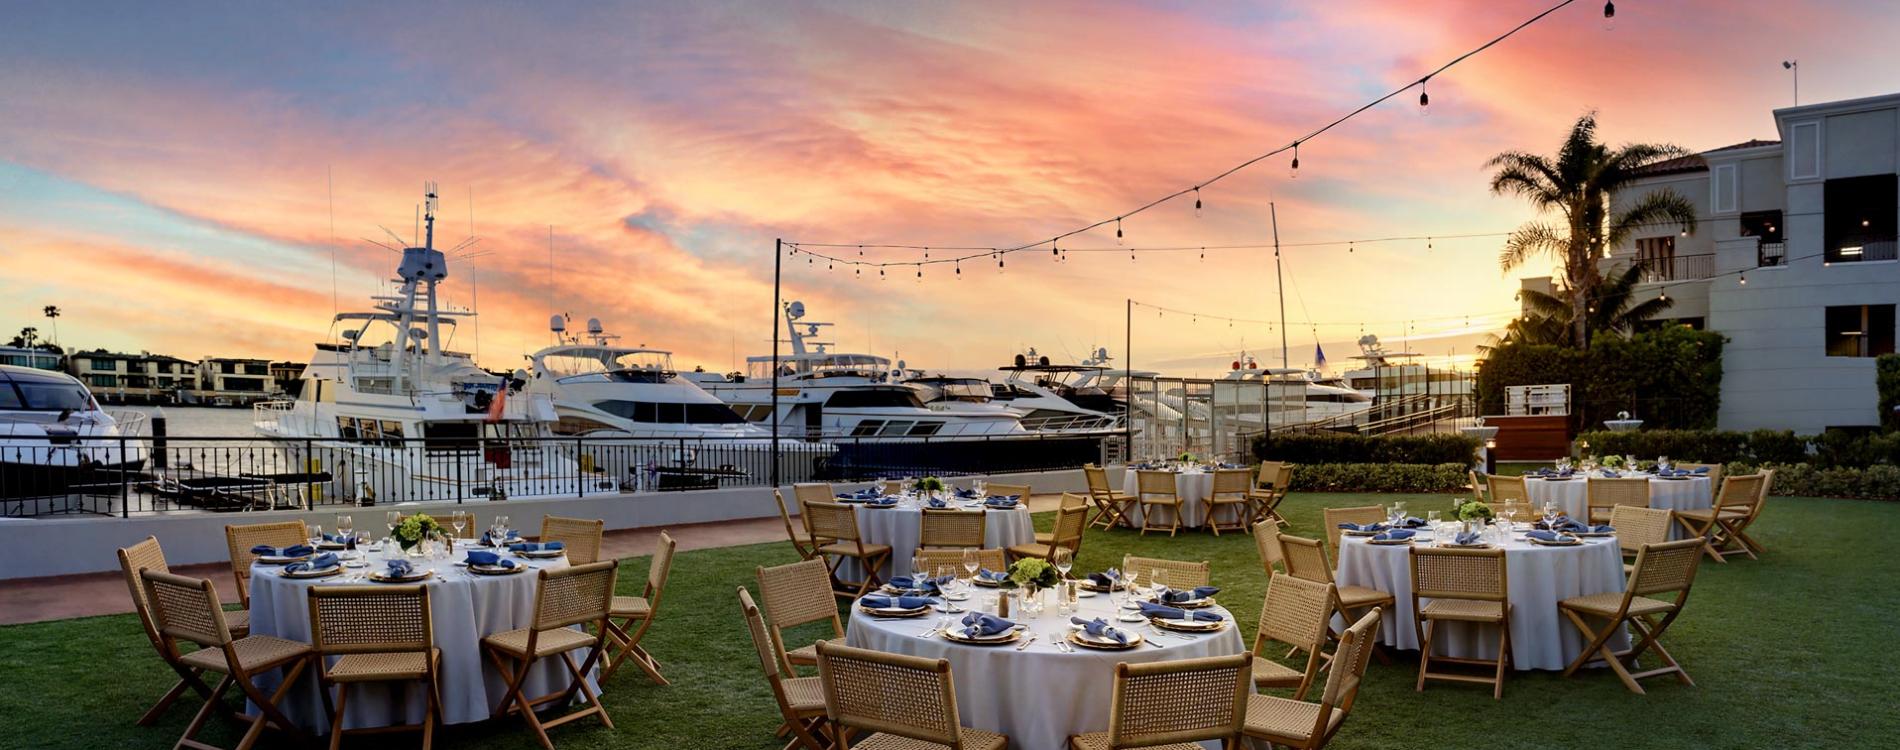 THE LOT FASHION ISLAND, Newport Beach - Restaurant Reviews, Photos &  Reservations - Tripadvisor